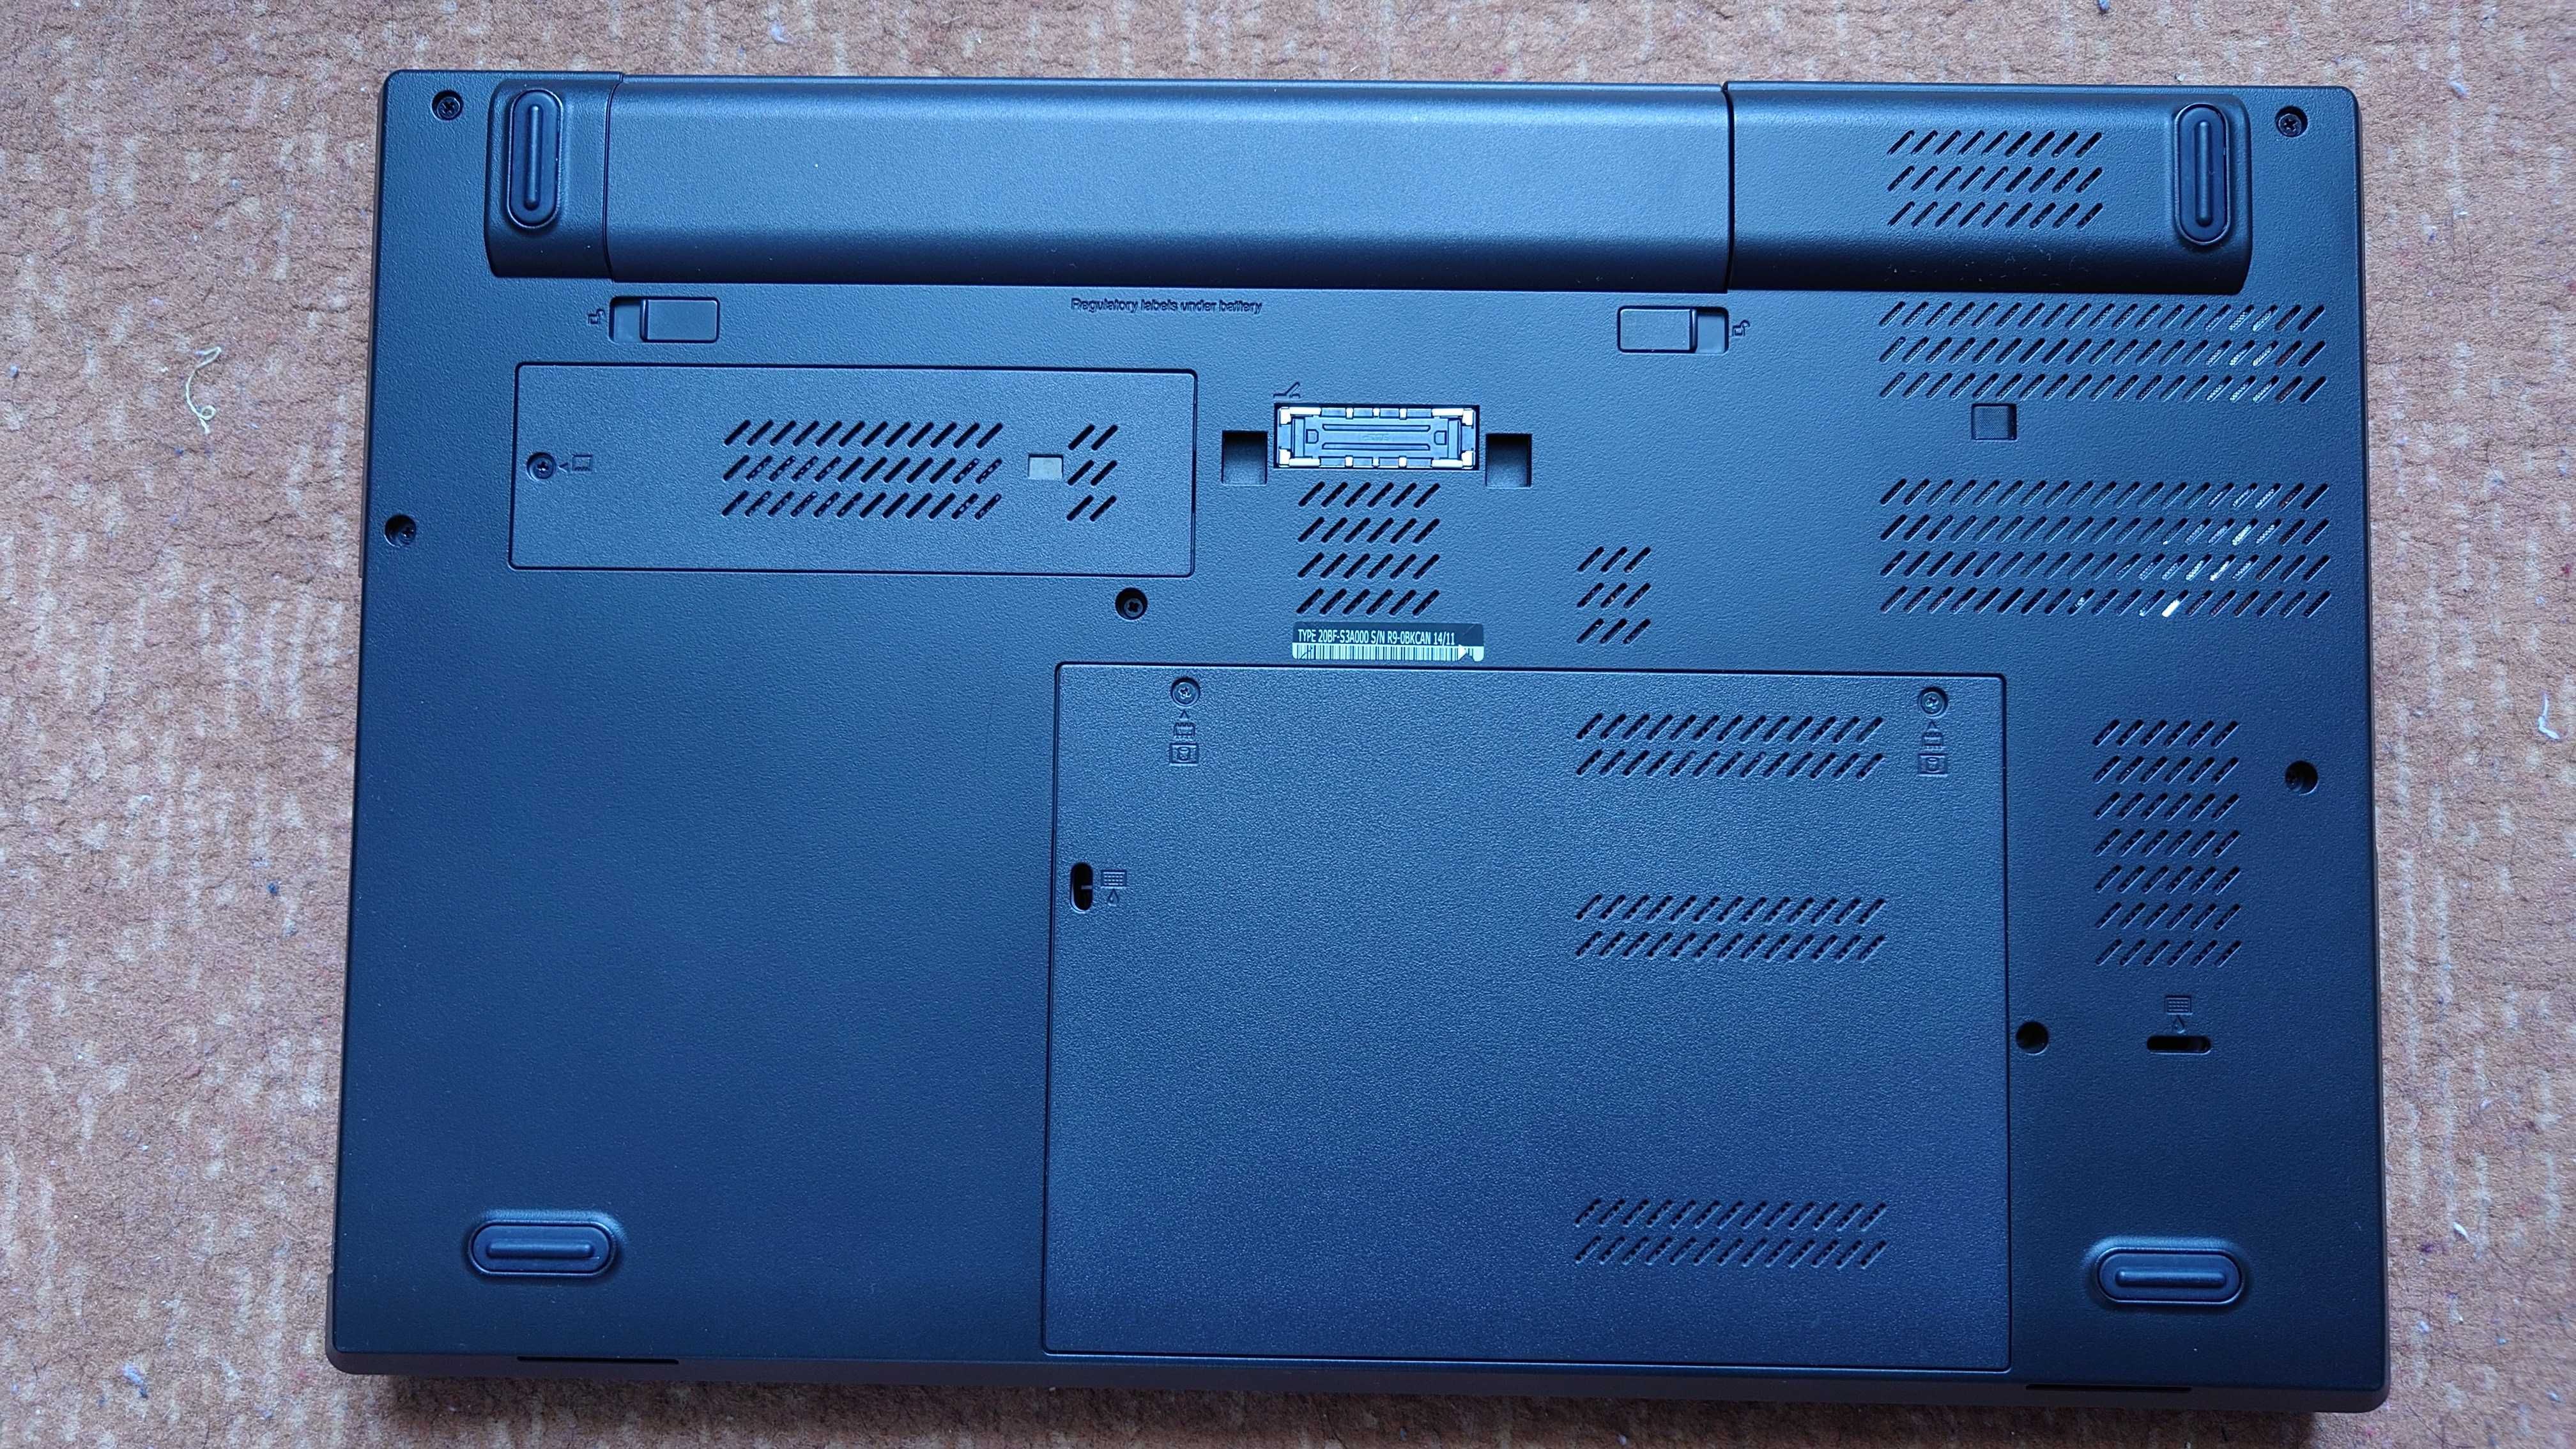 Лаптоп Lenovo ThinkPad Т540P